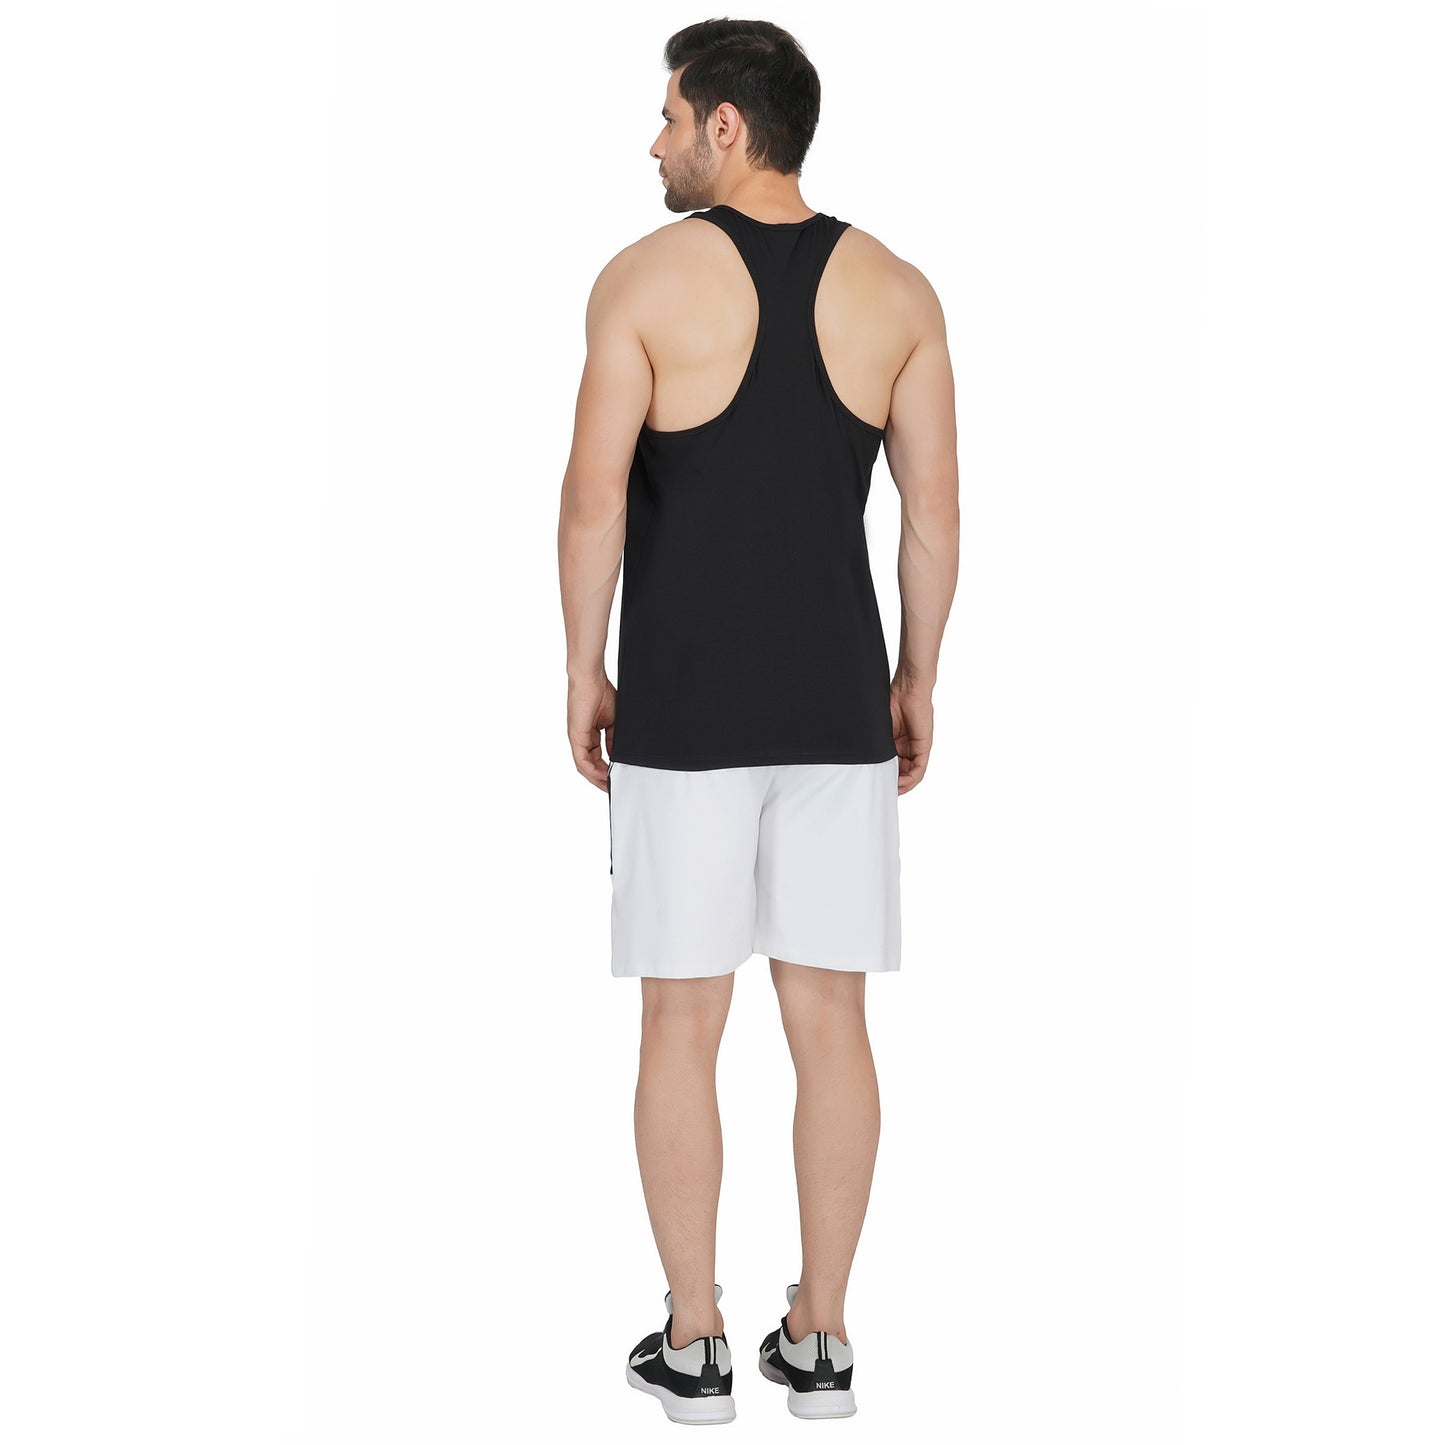 SLAY. Sport Men's Black Sleeveless Vest-clothing-to-slay.myshopify.com-Sleeveless Dropcut T-shirt